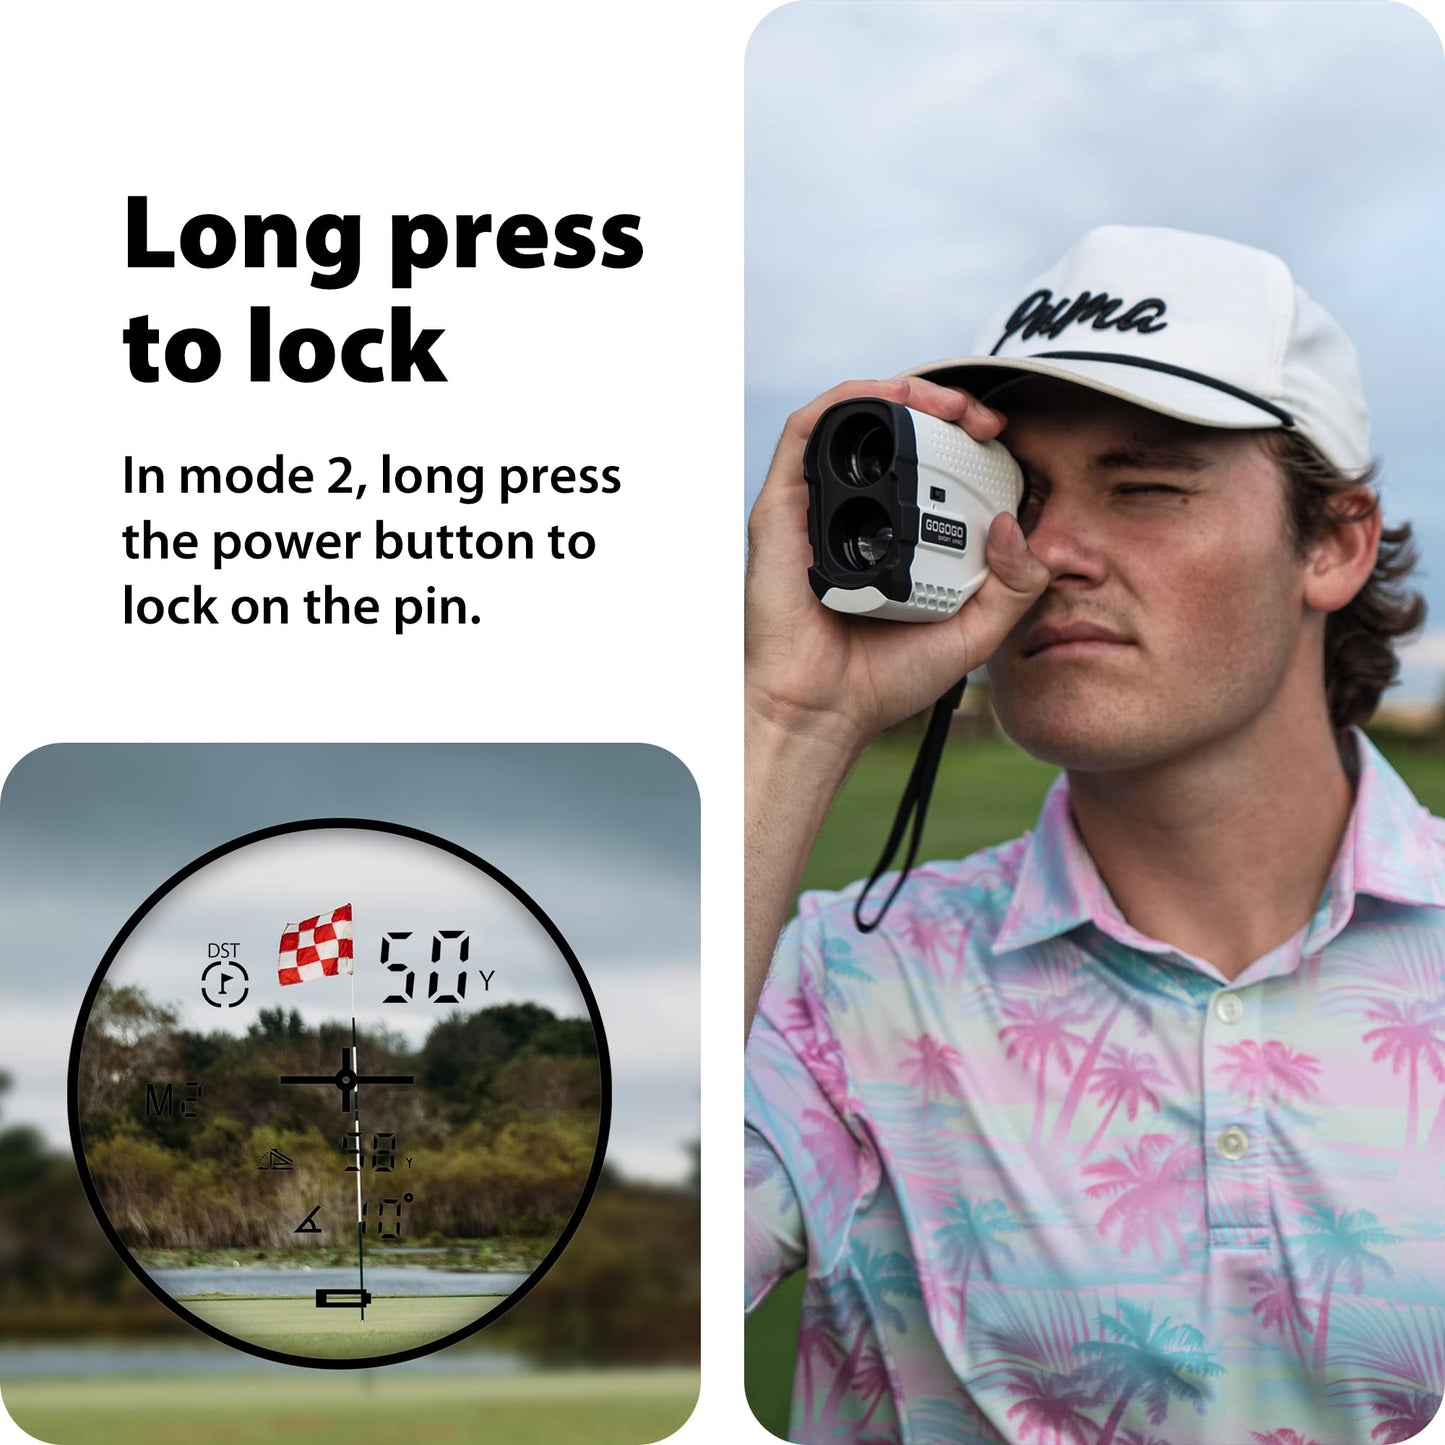 Gogogo Sport Vpro Laser Rangefinder for Golf & Hunting Range Finder Distance Measuring with High-Precision Flag Pole Locking Vibration Function Slope Mode Continuous Scan (GS24)